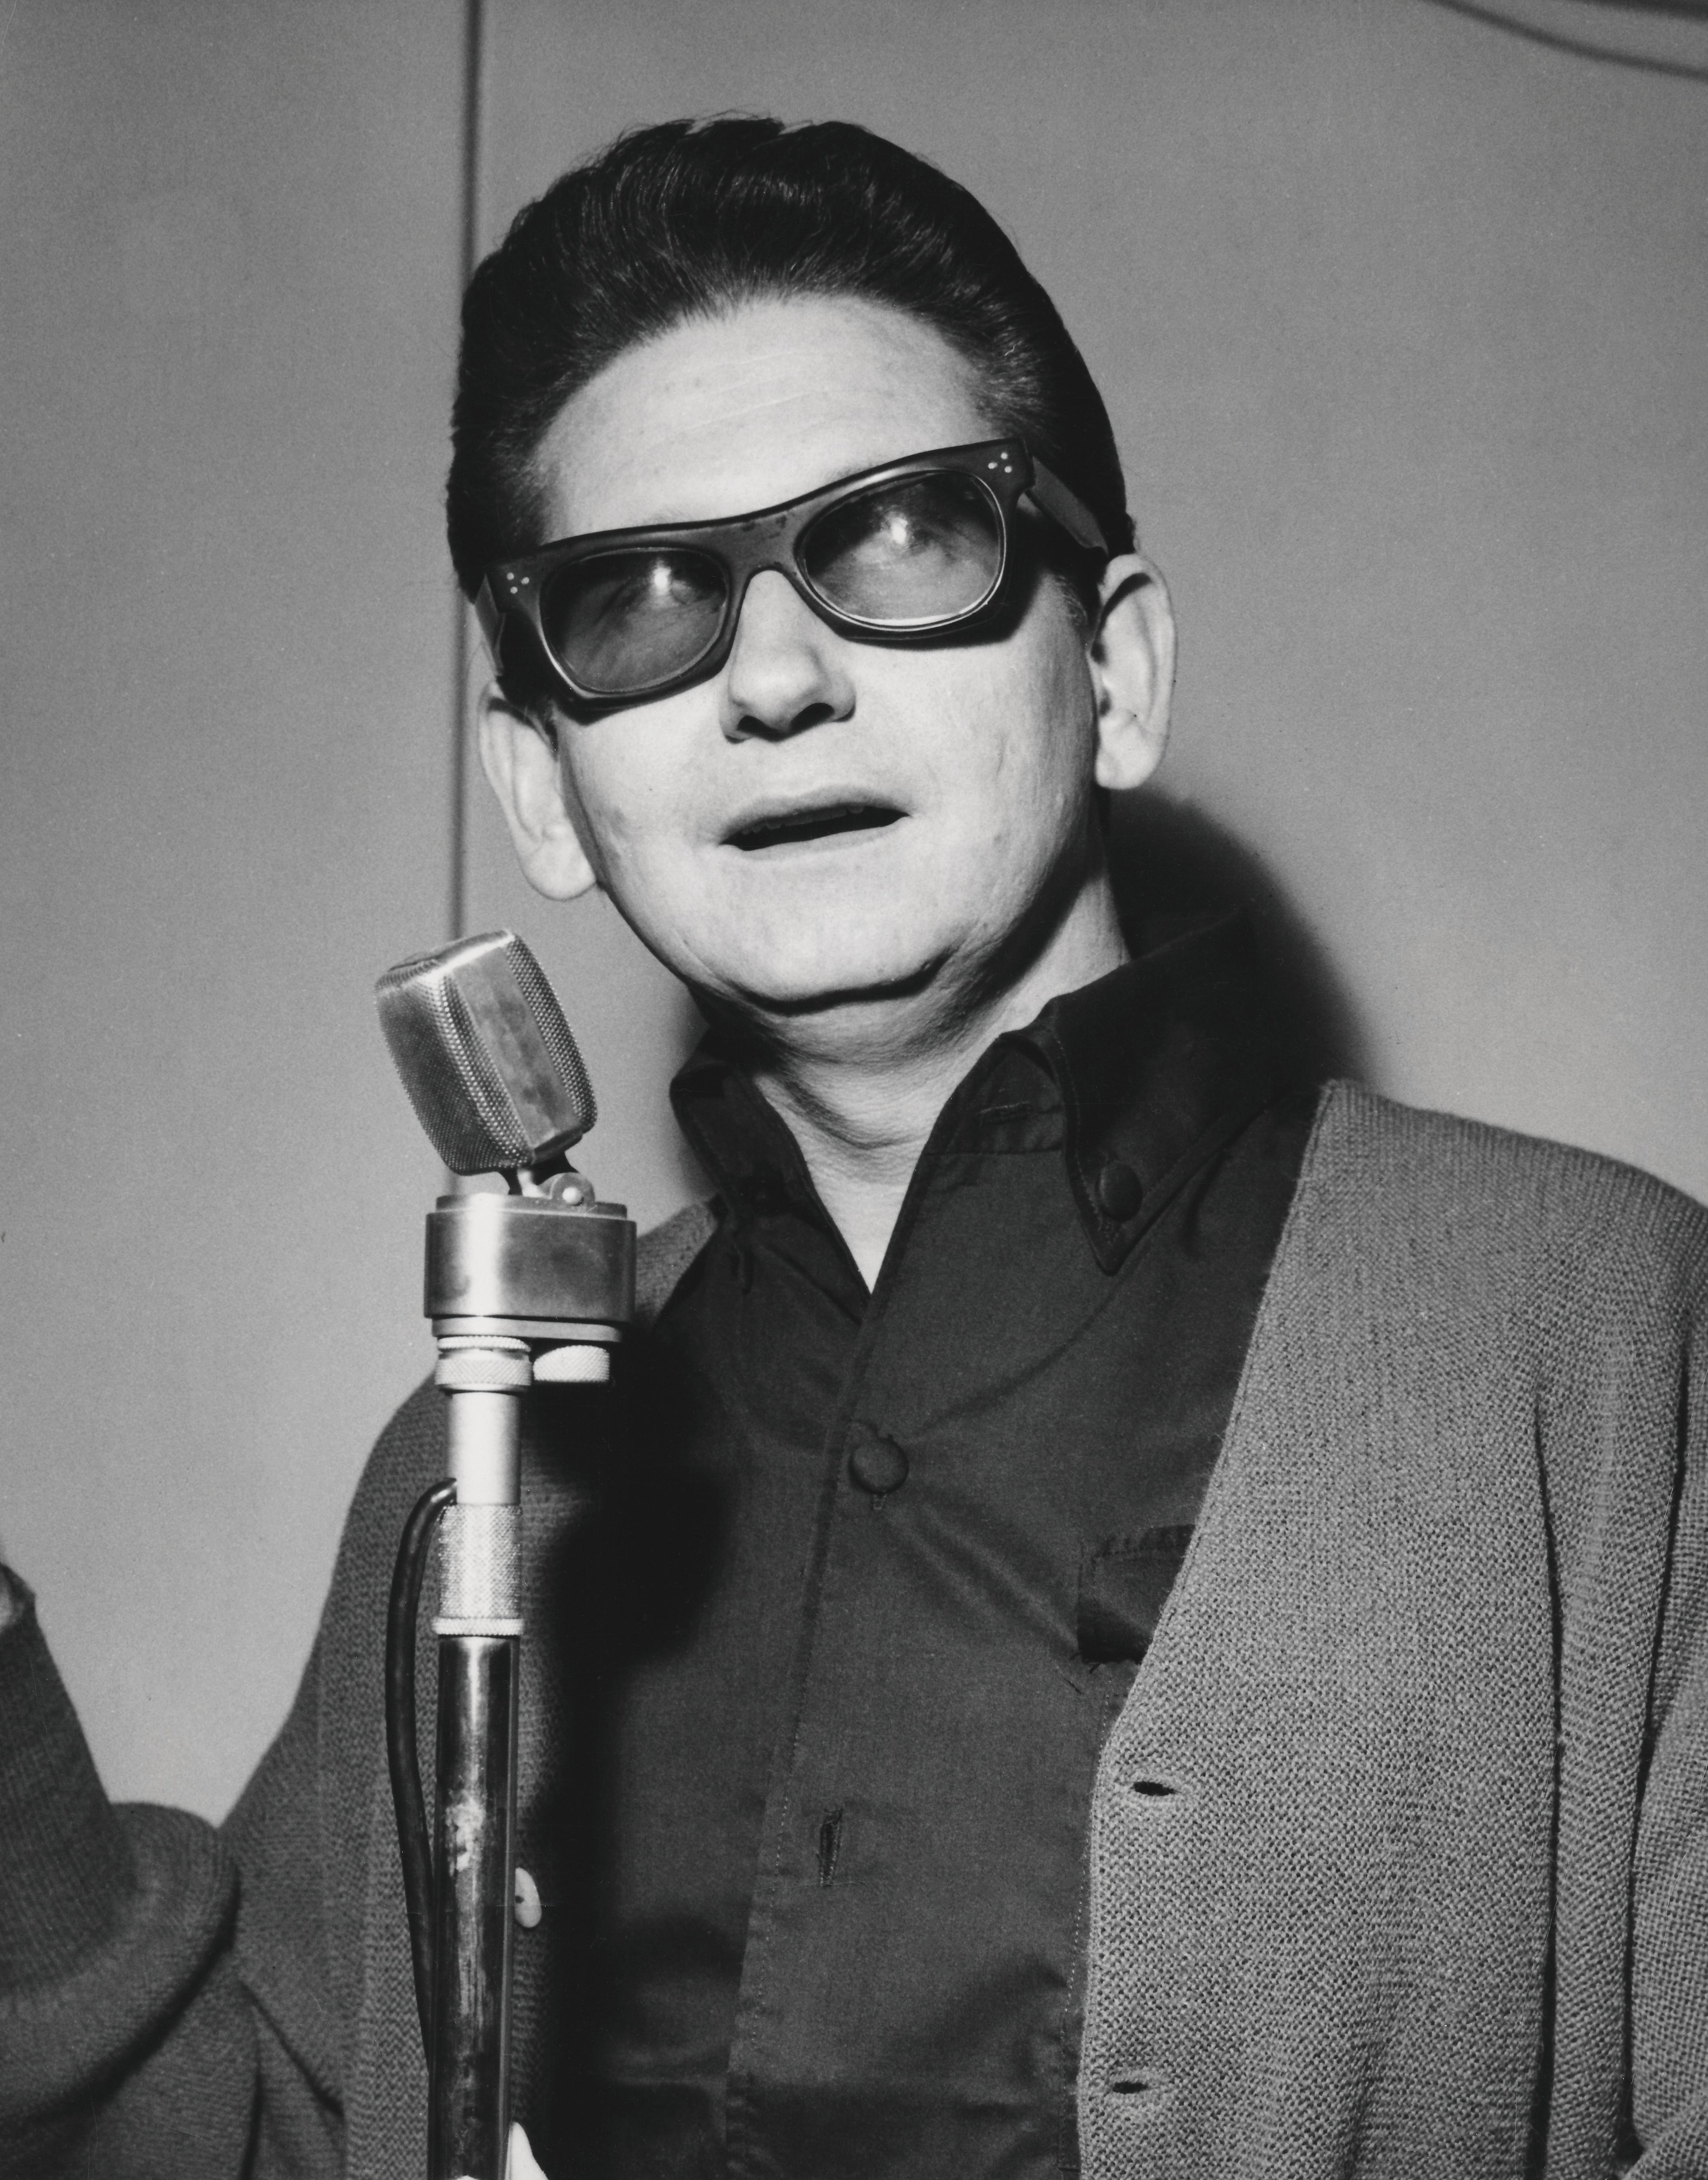 Unknown Portrait Photograph - Roy Orbison in Sunglasses II Globe Photos Fine Art Print